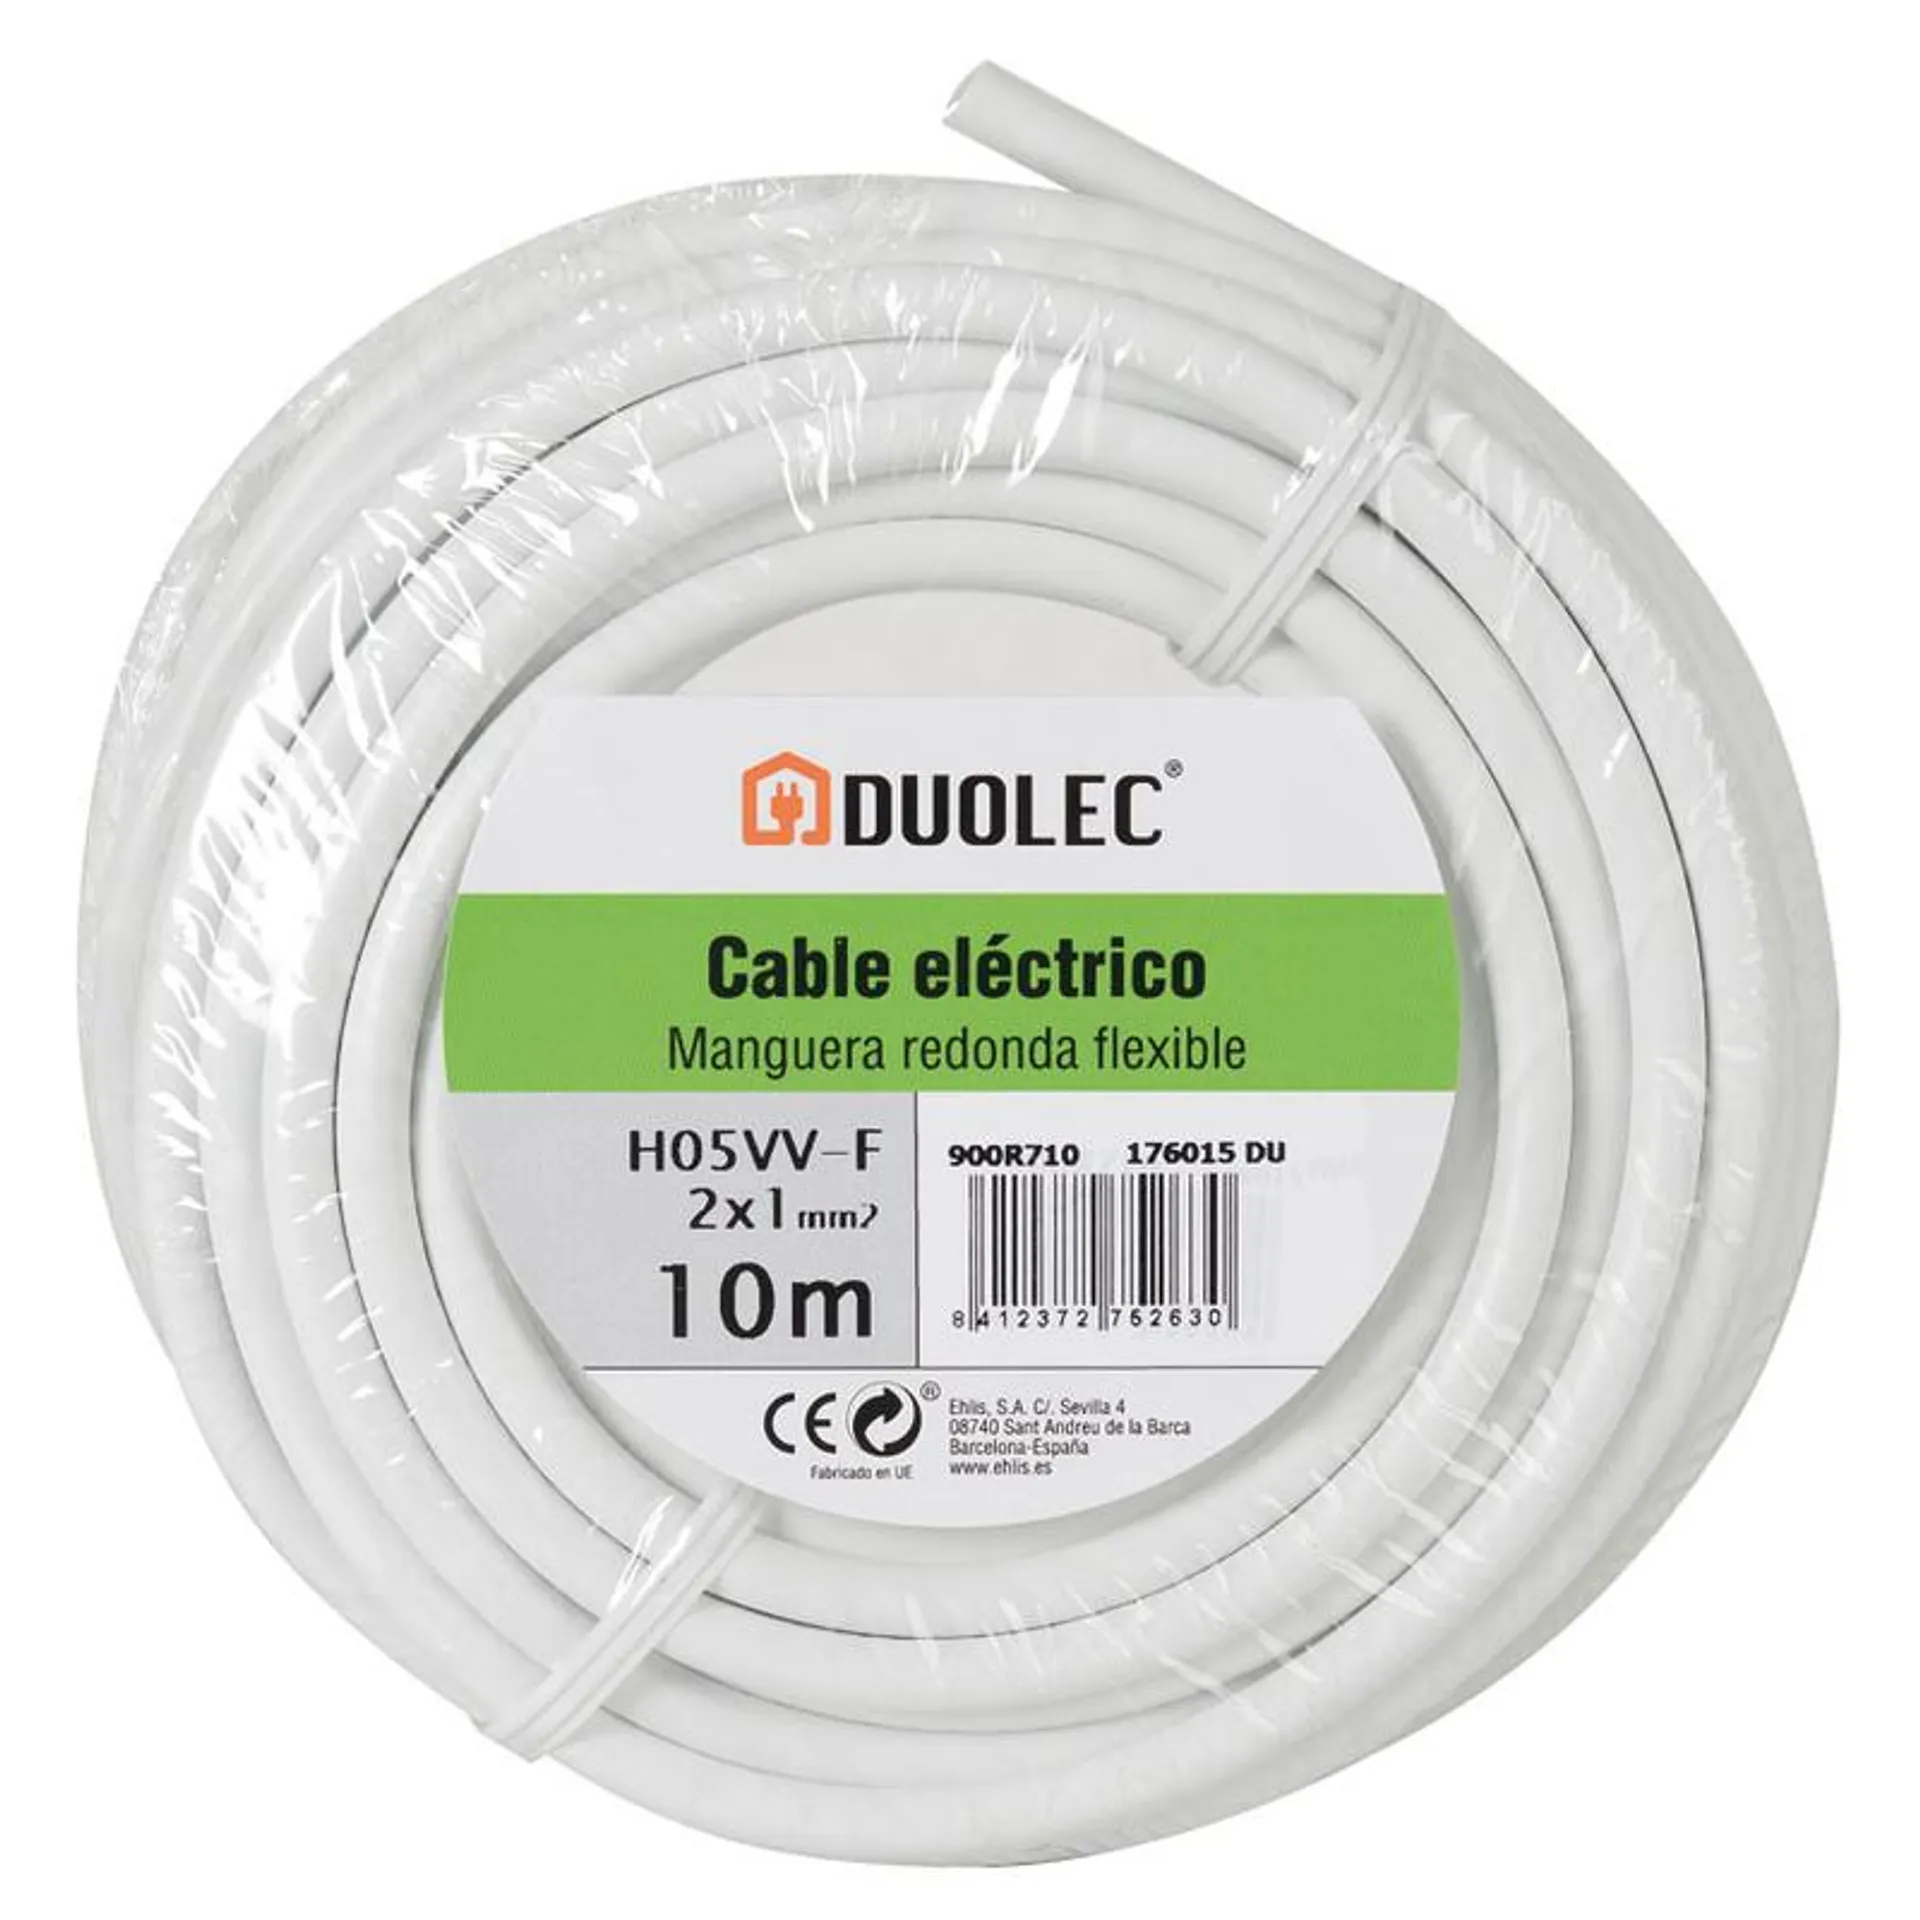 Cable eléctrico bipolar manguera DUOLEC blanco UNE H05VV-F mini rollo 10m